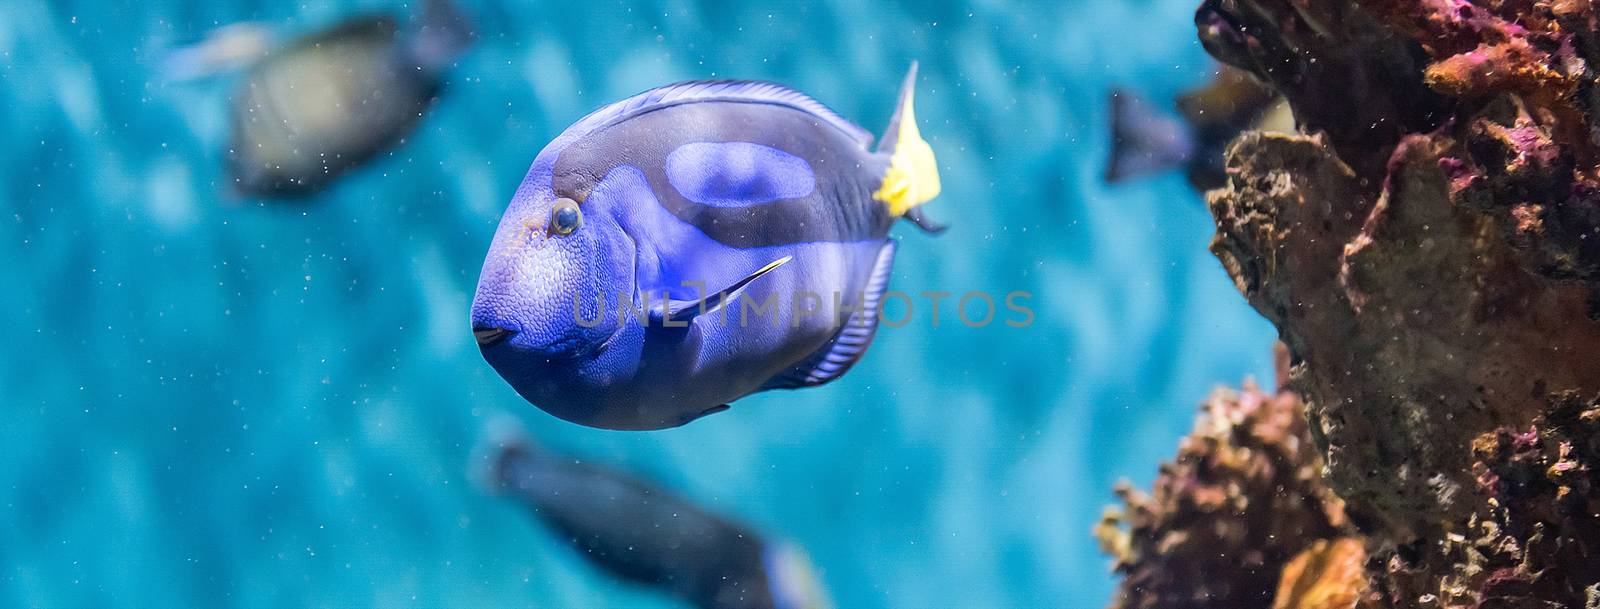 Closeup of a regal blue tang in aquarium environment by marcorubino